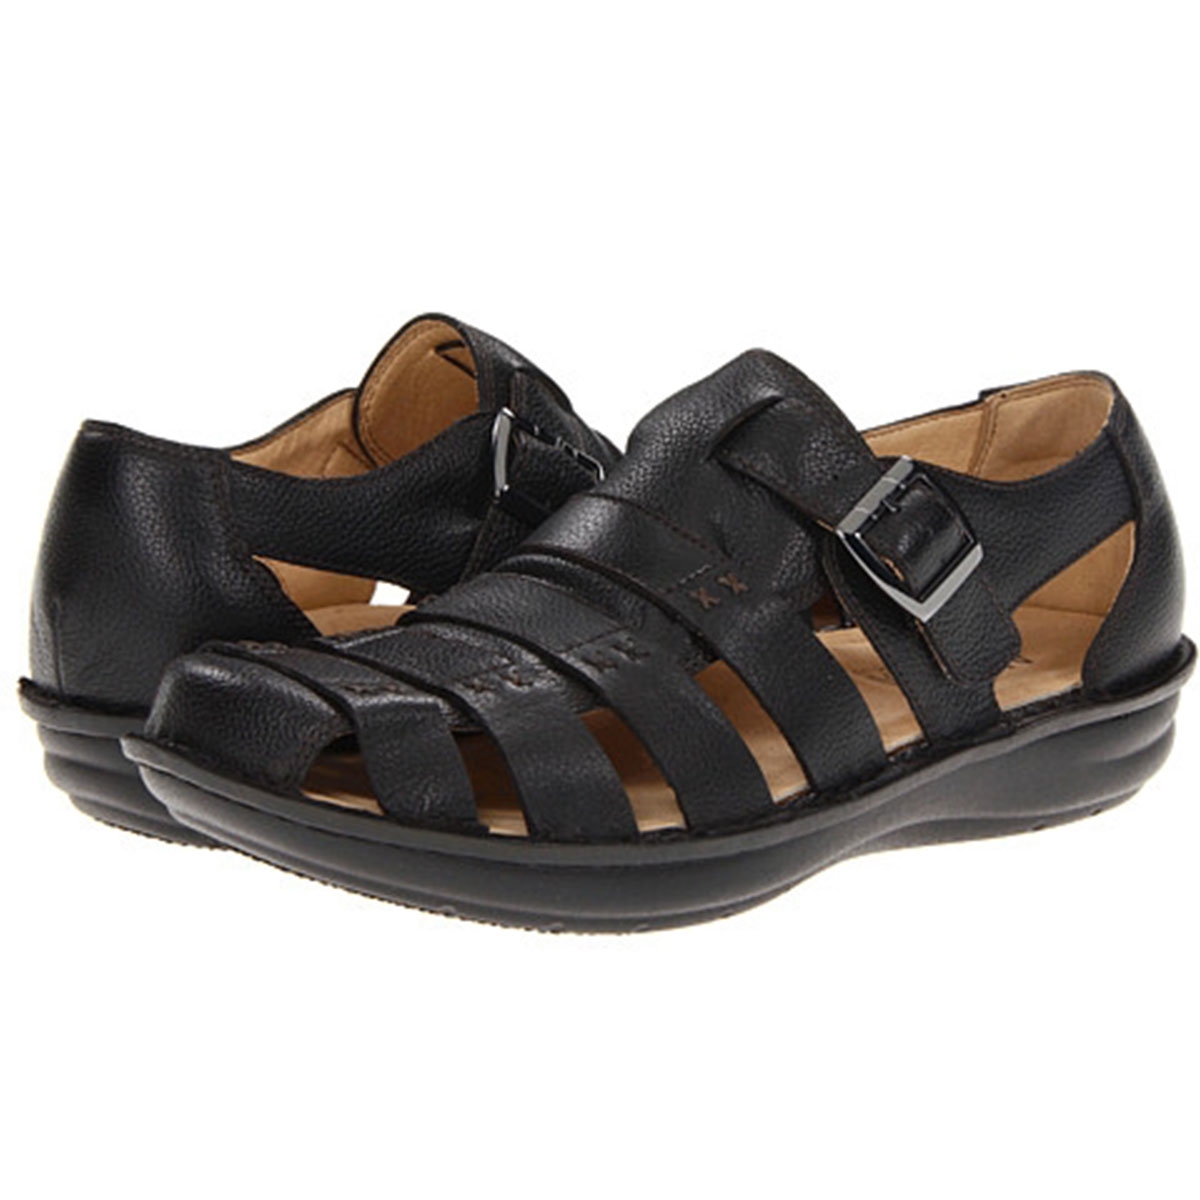 Alegria Shoes - Martinique Black Tumbled